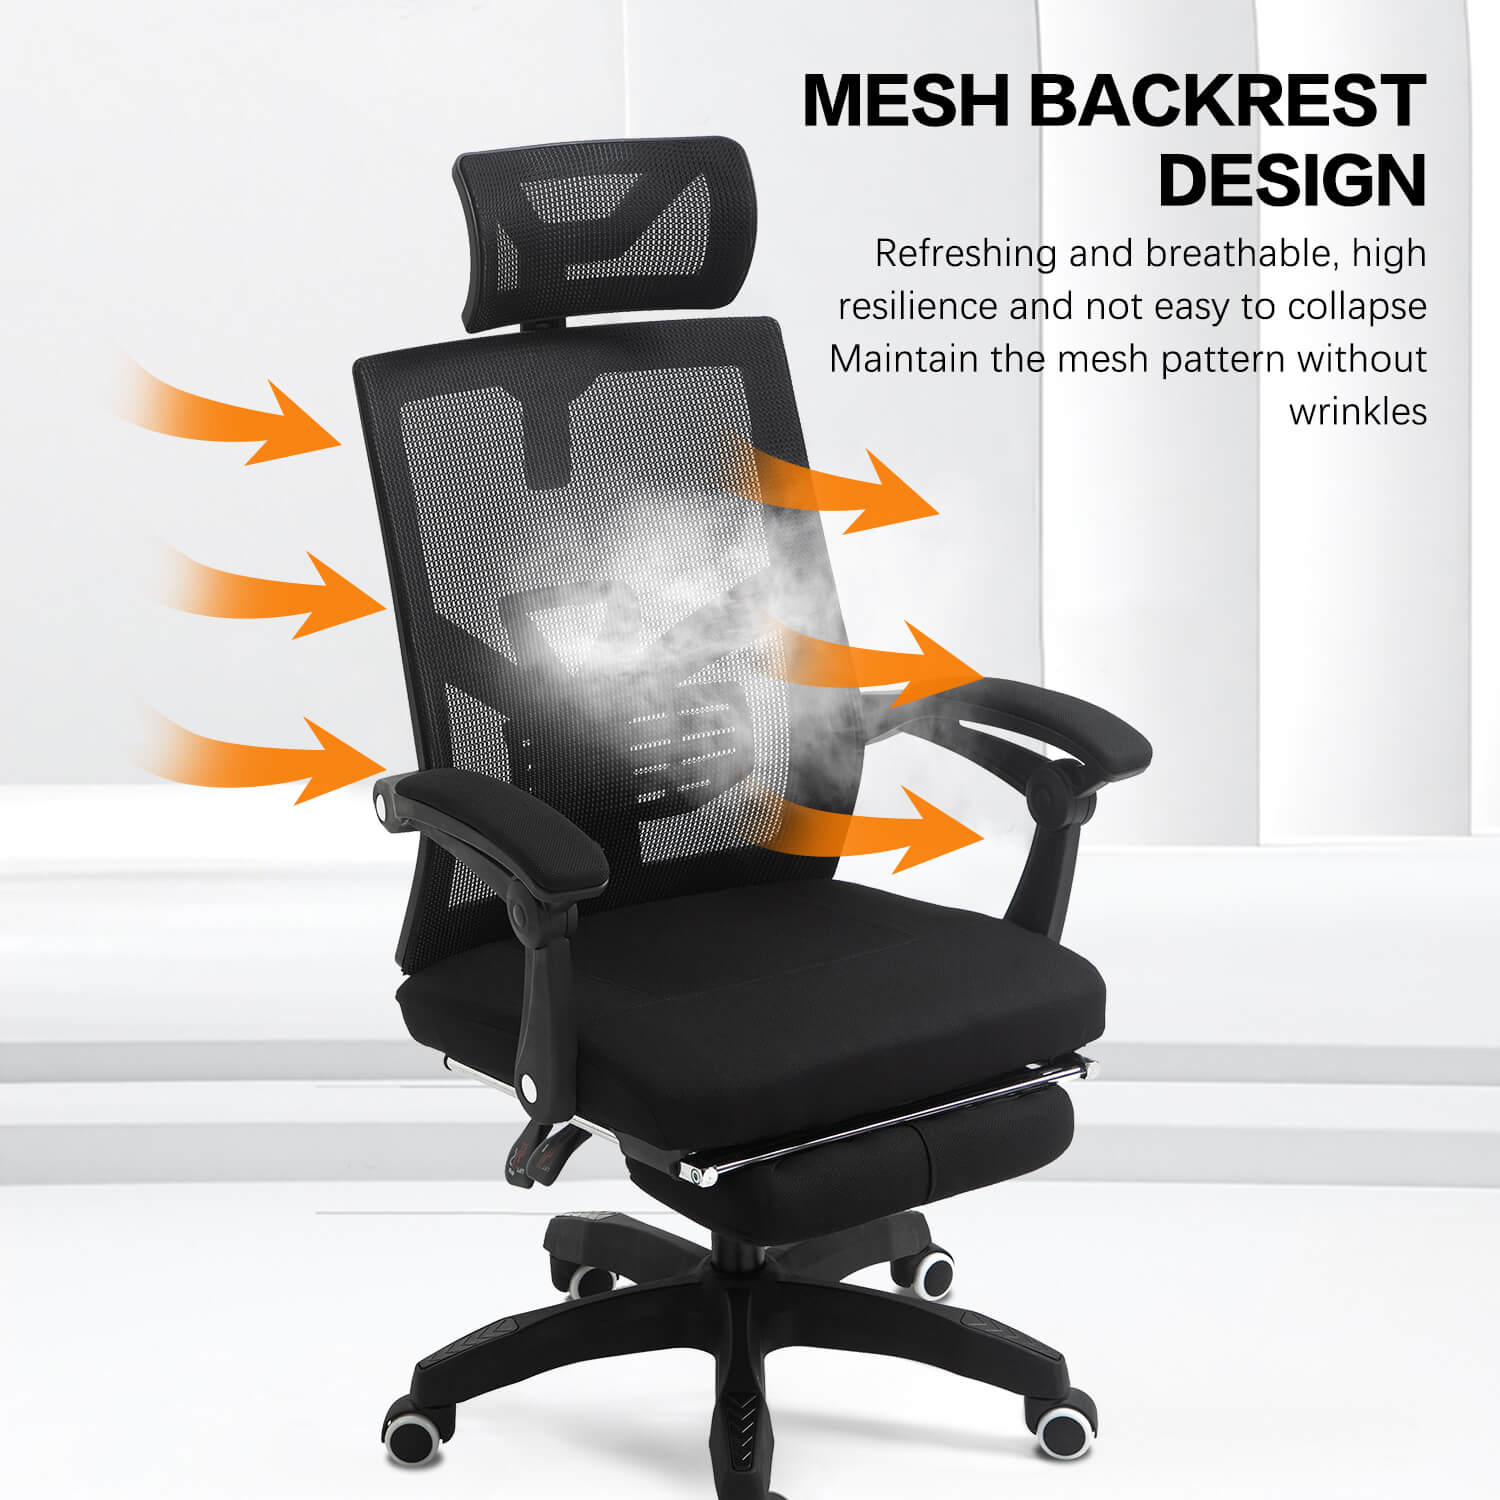 ECVV Ergonomic Adjustable Office Chair High Back Computer; ECVV SA